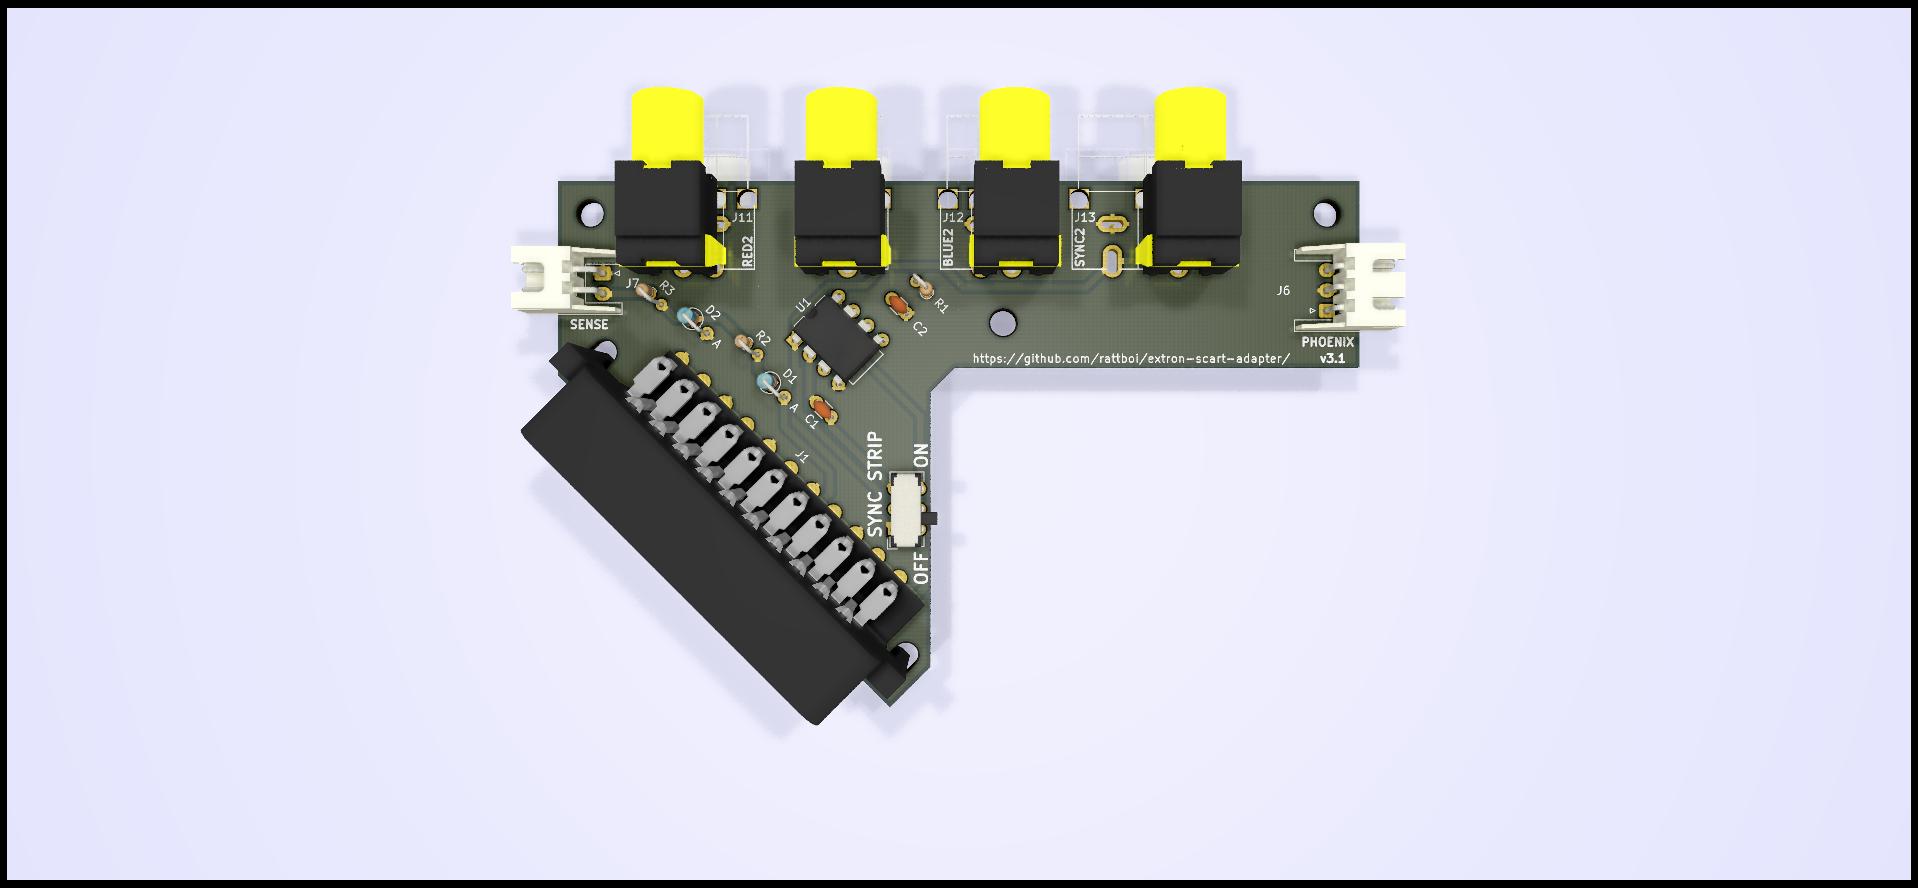 Extron SCART input/output Adapter PCB